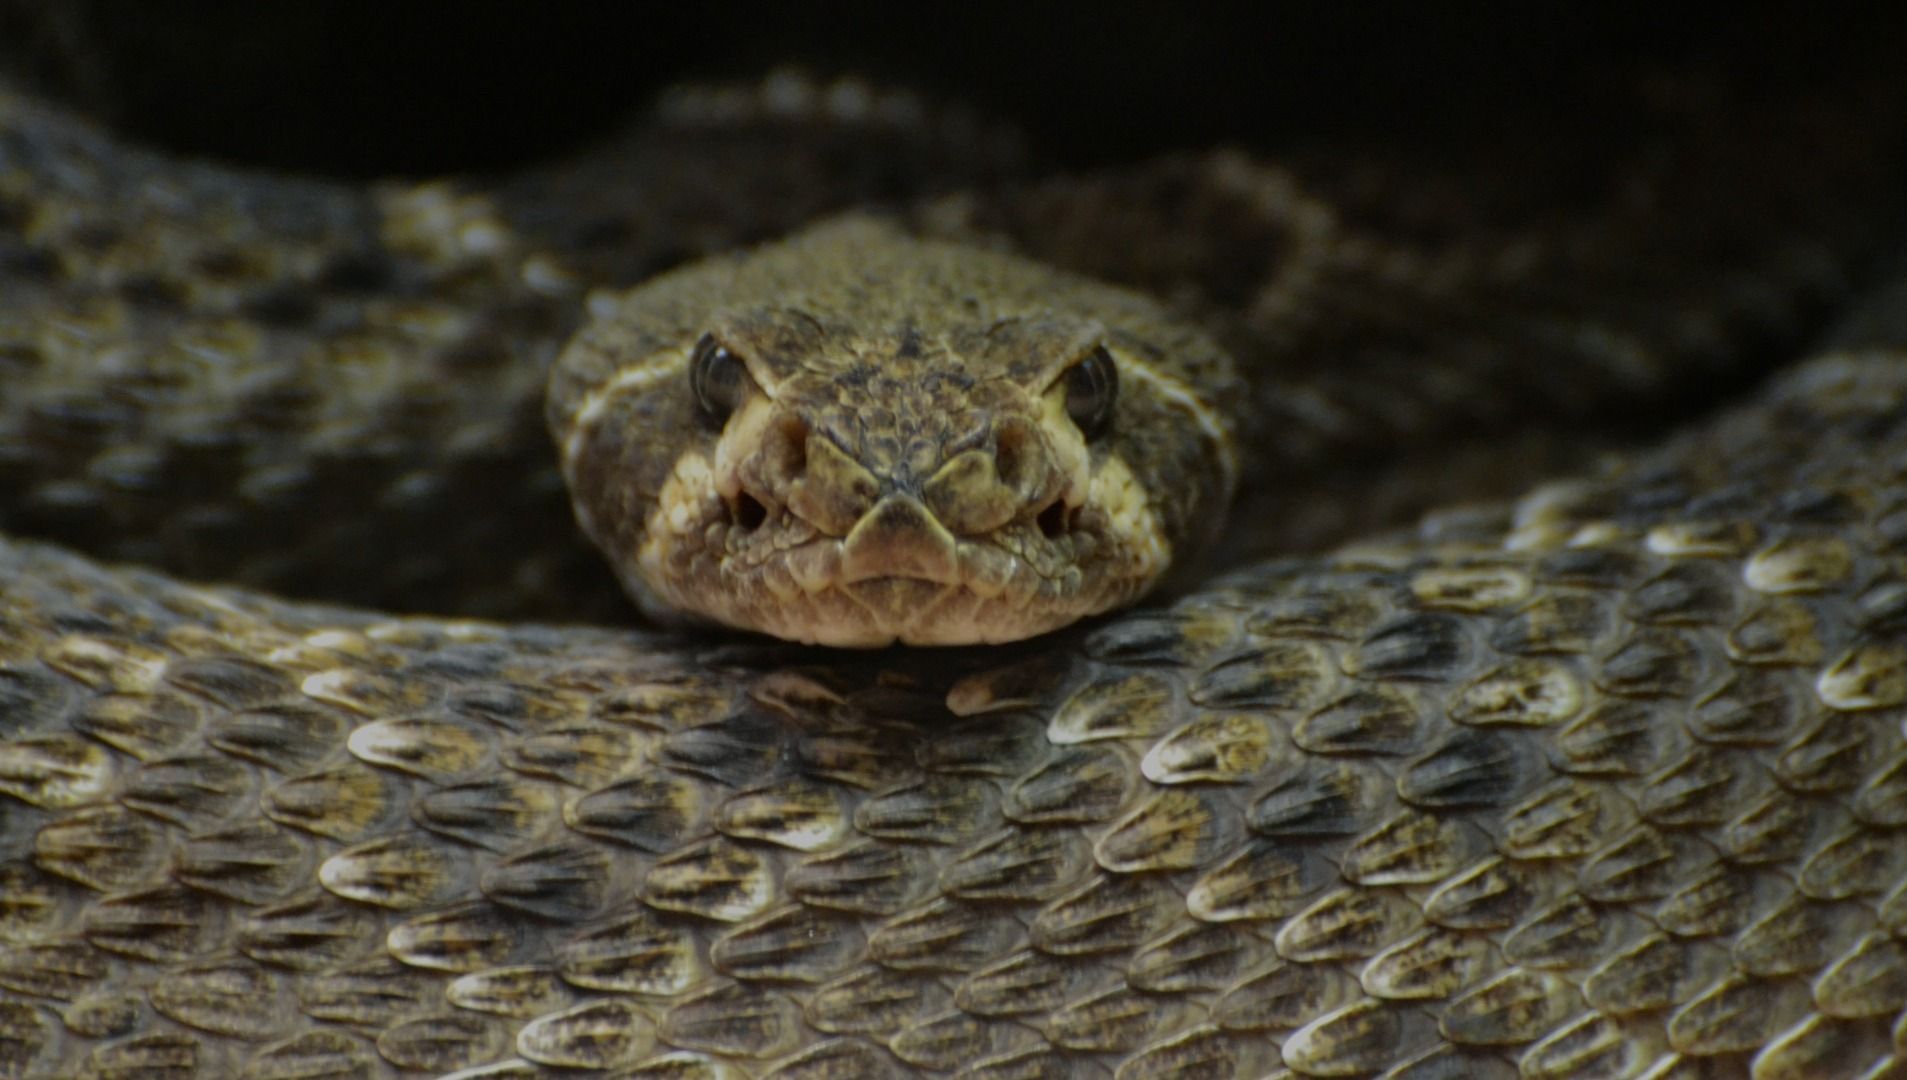 A close up of a rattlesnake looking at the camera.